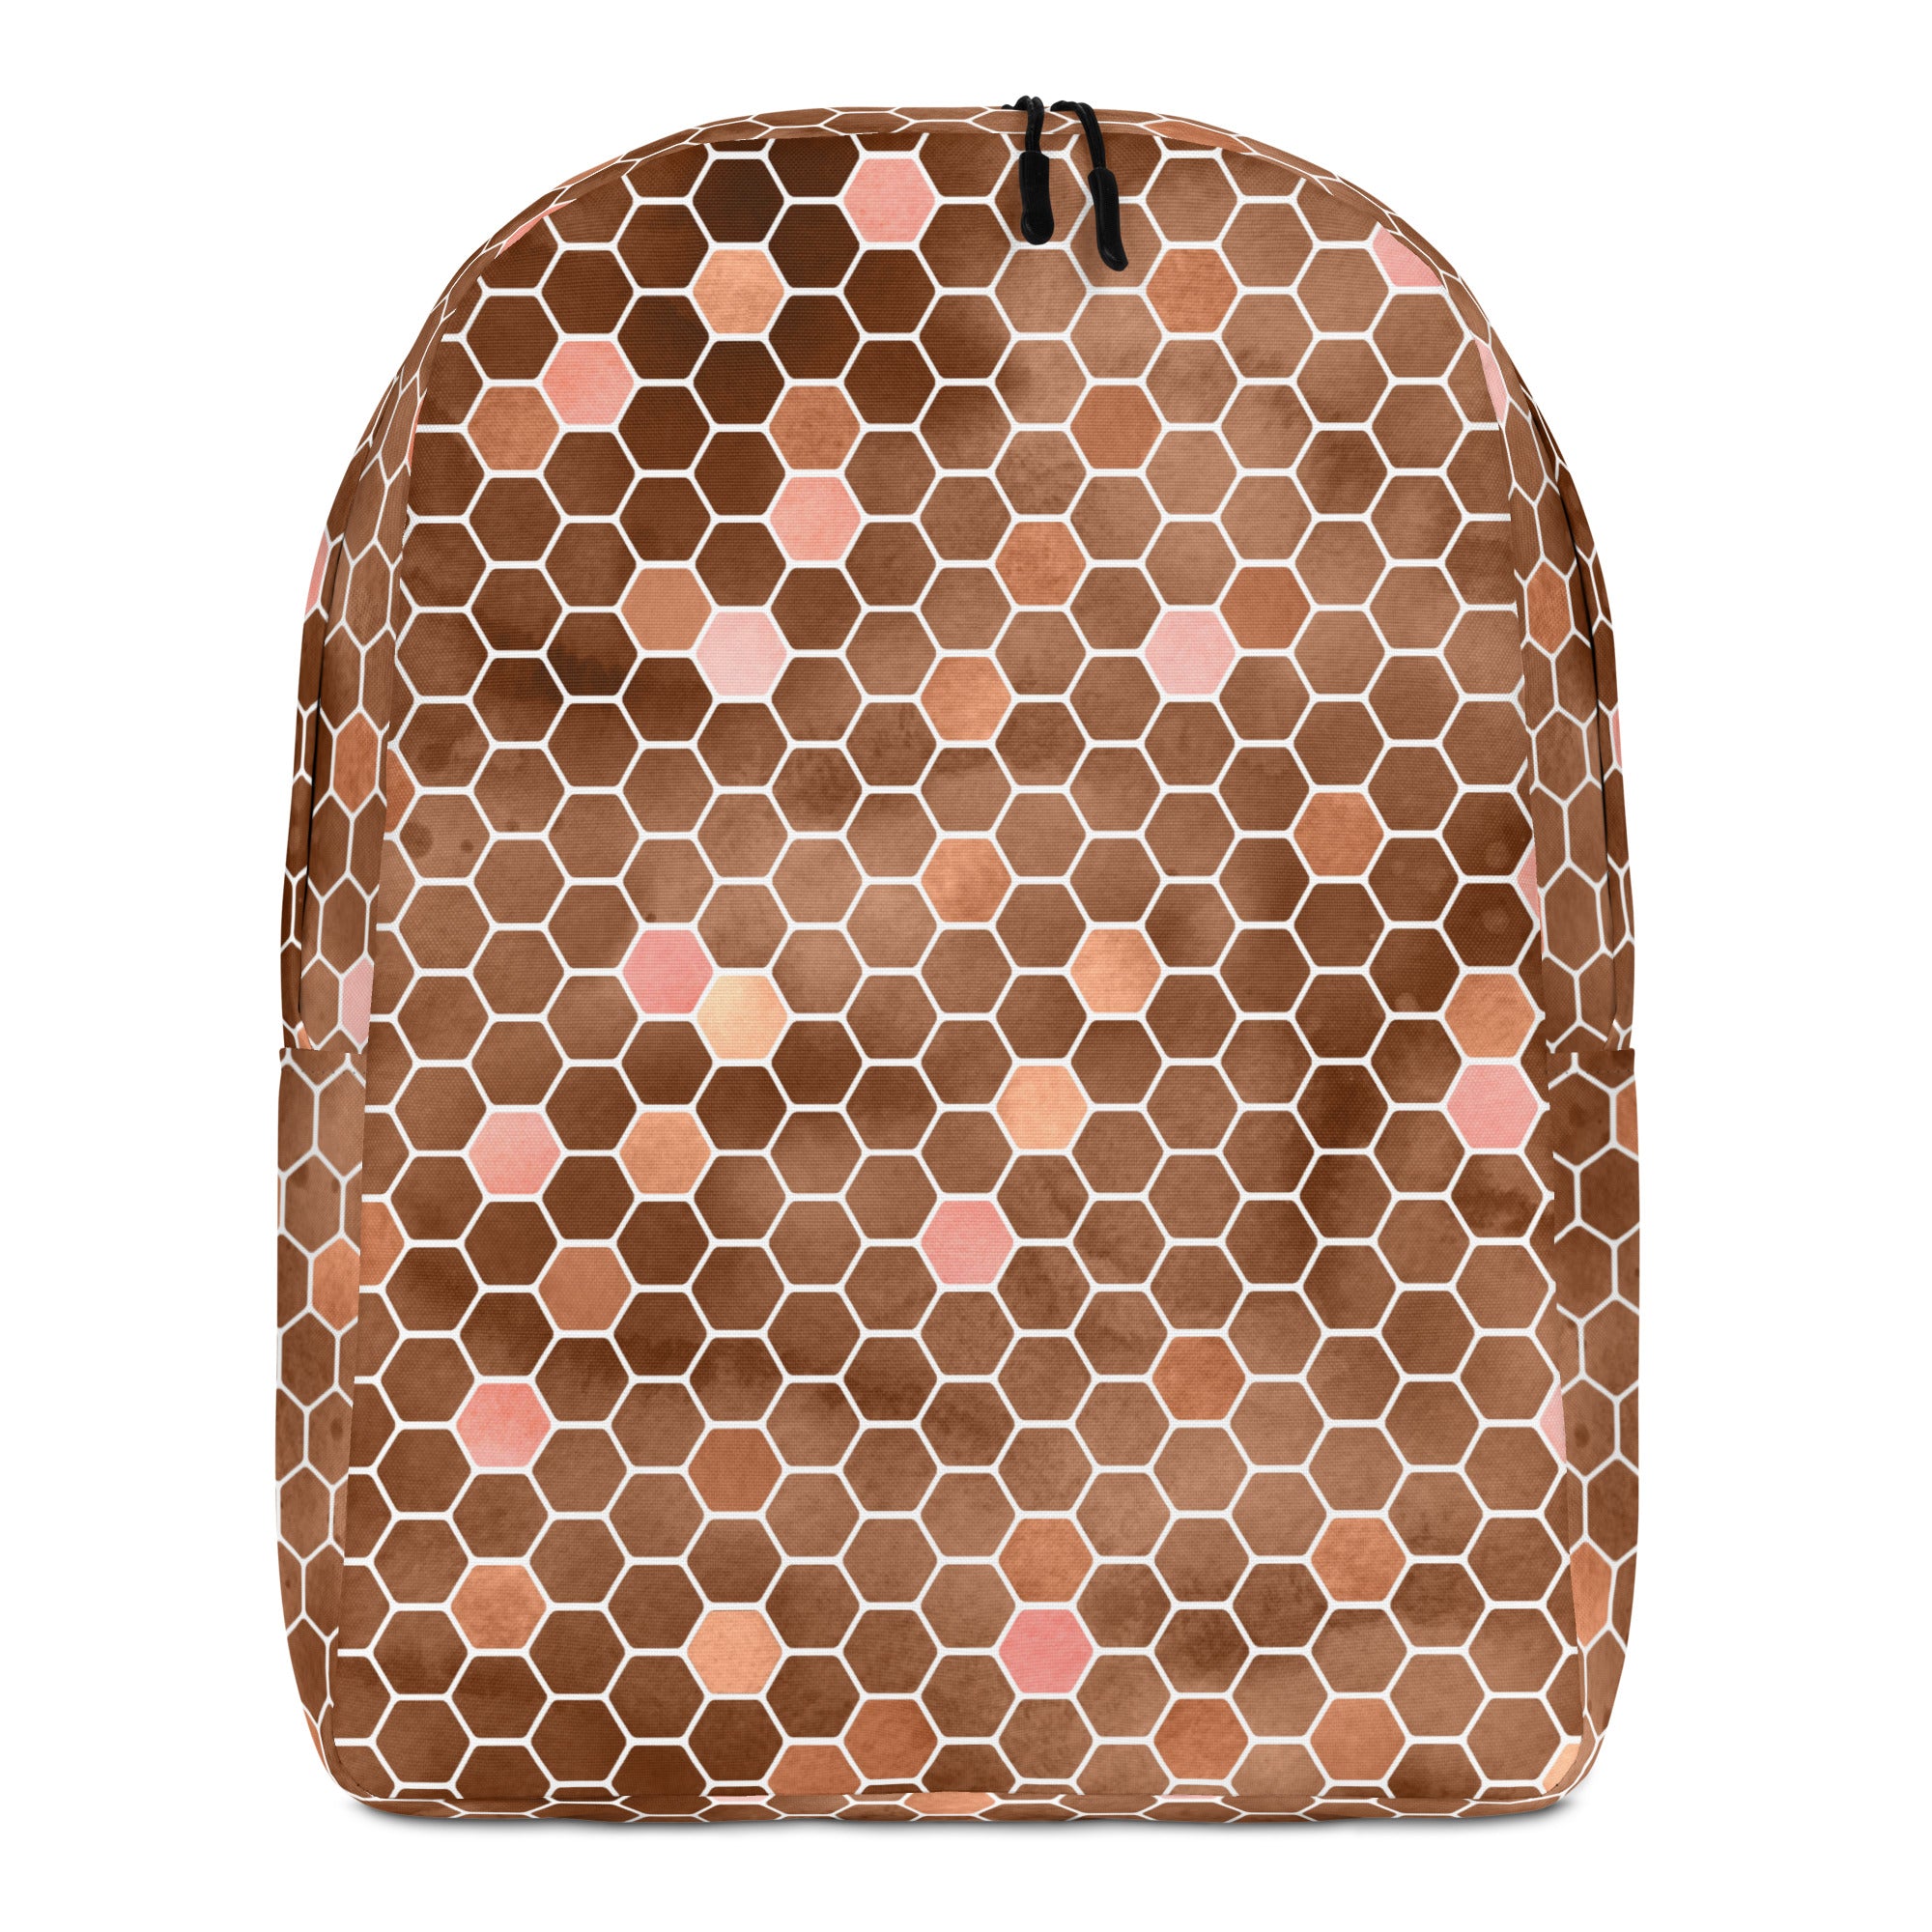 Minimalist Backpack- Honeycomb Brown